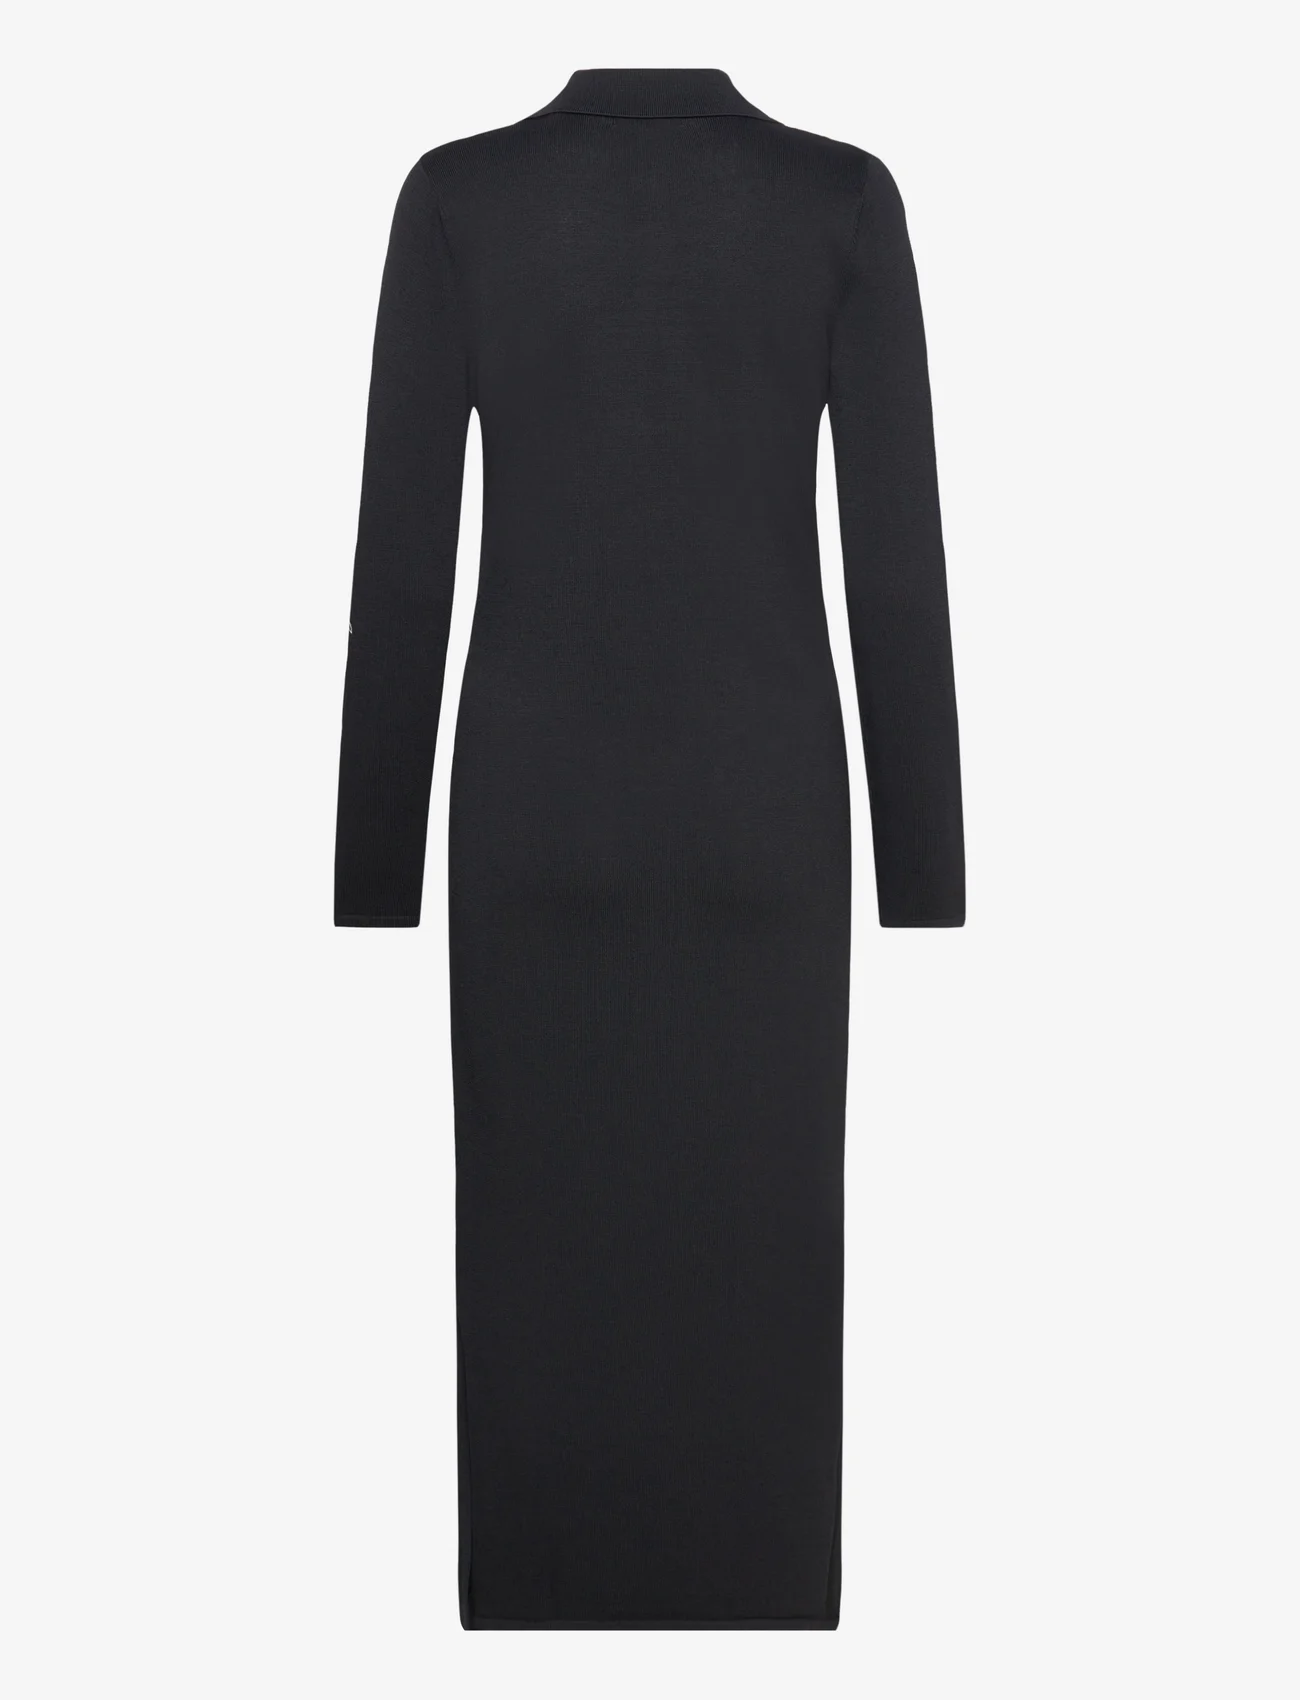 Armani Exchange - DRESS - knitted dresses - 1200-black - 1